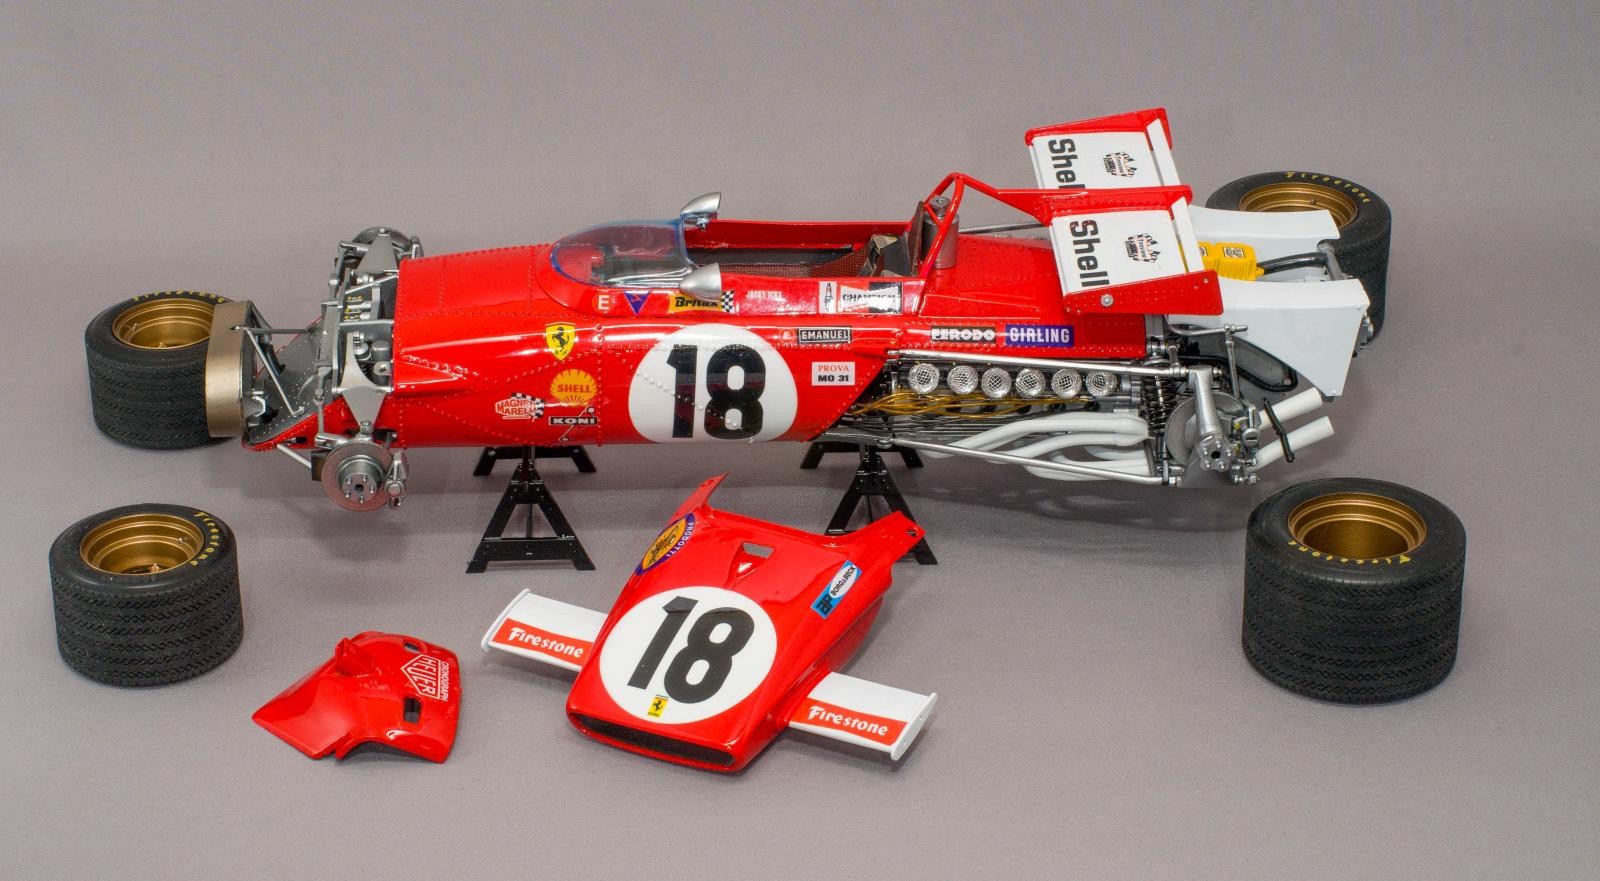 1971 Ferrari 312B - Jacky Ickx – Tamiya 1/12 - Formula 1 - iModeler